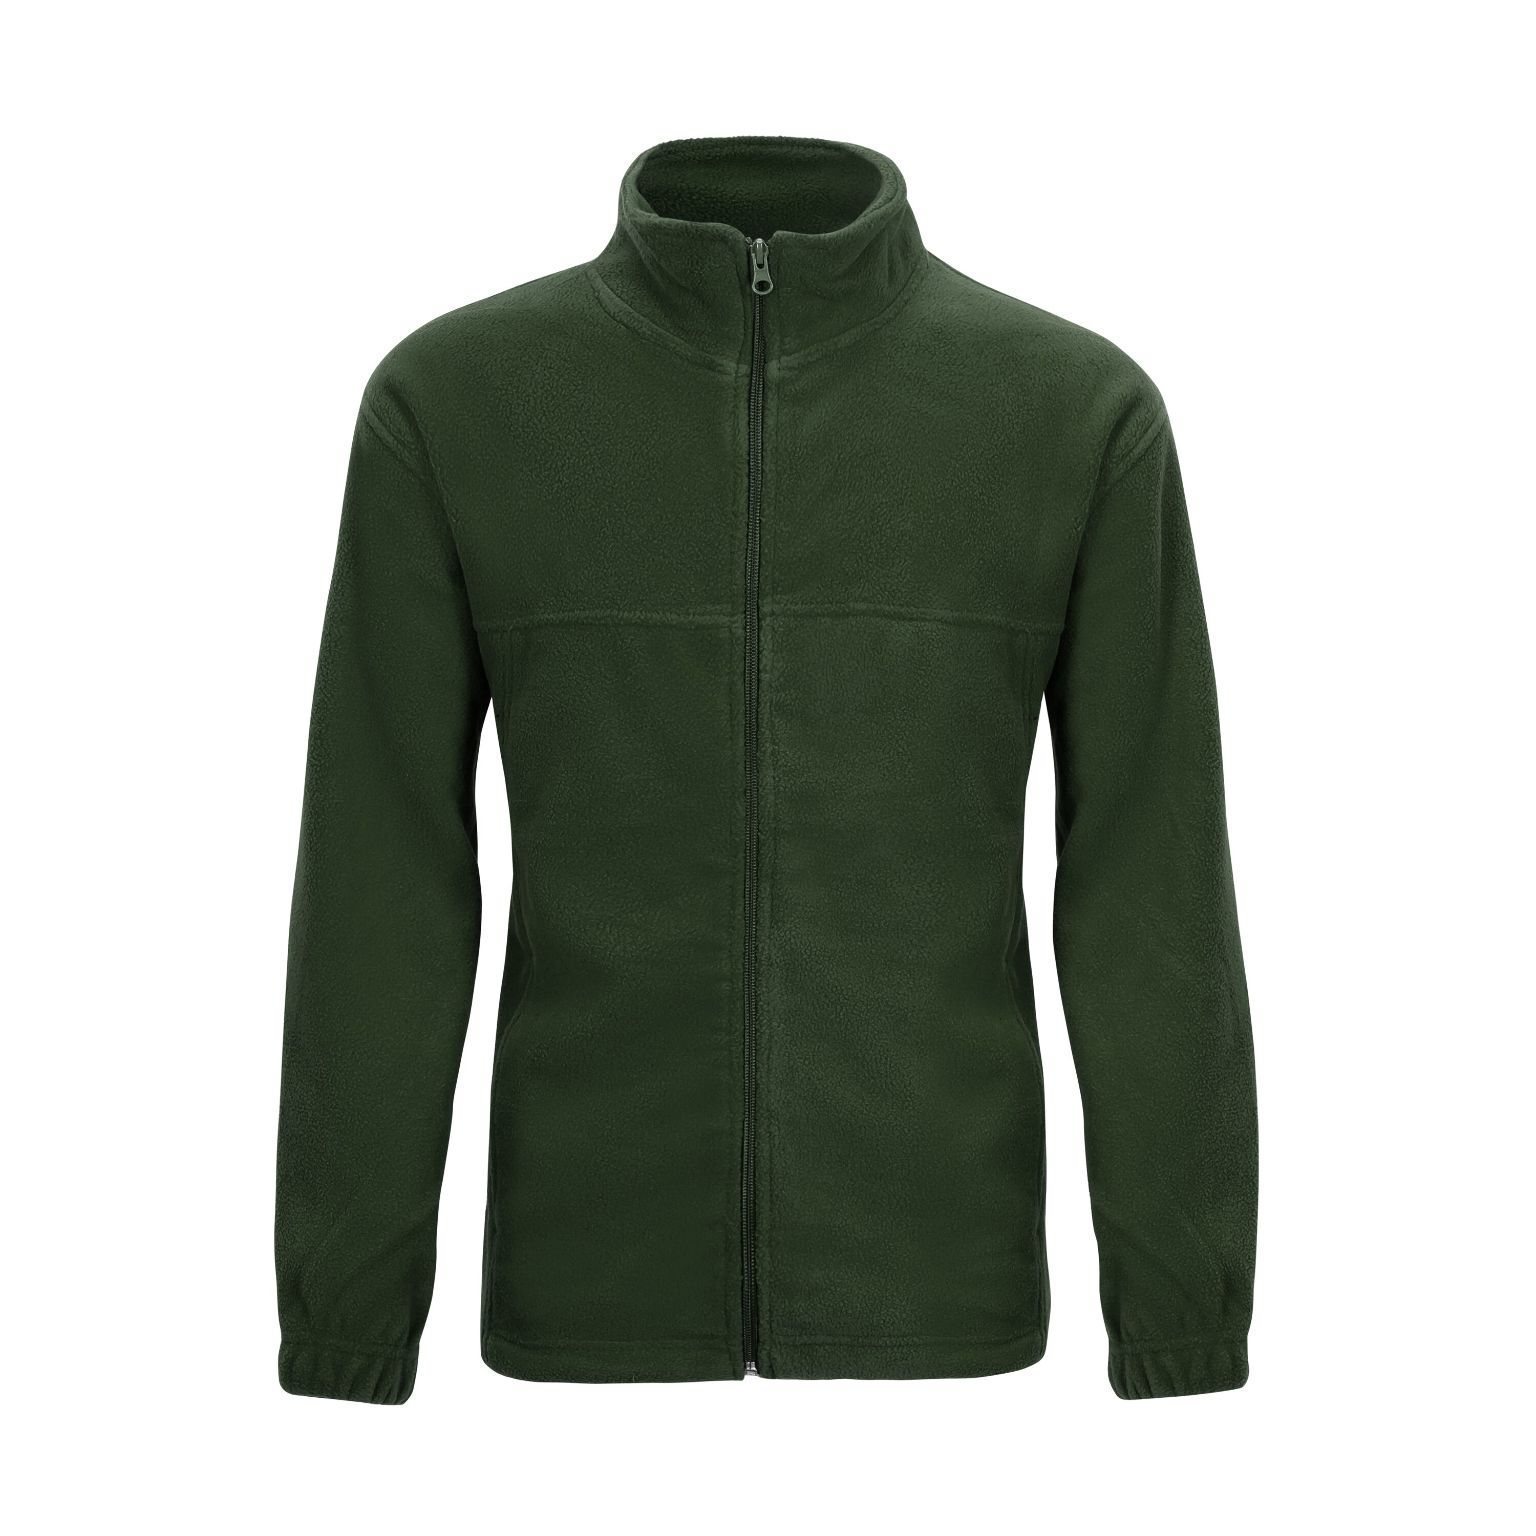 Wholesale Men's Fleece Jackets, 3X, Hunter Green - DollarDays